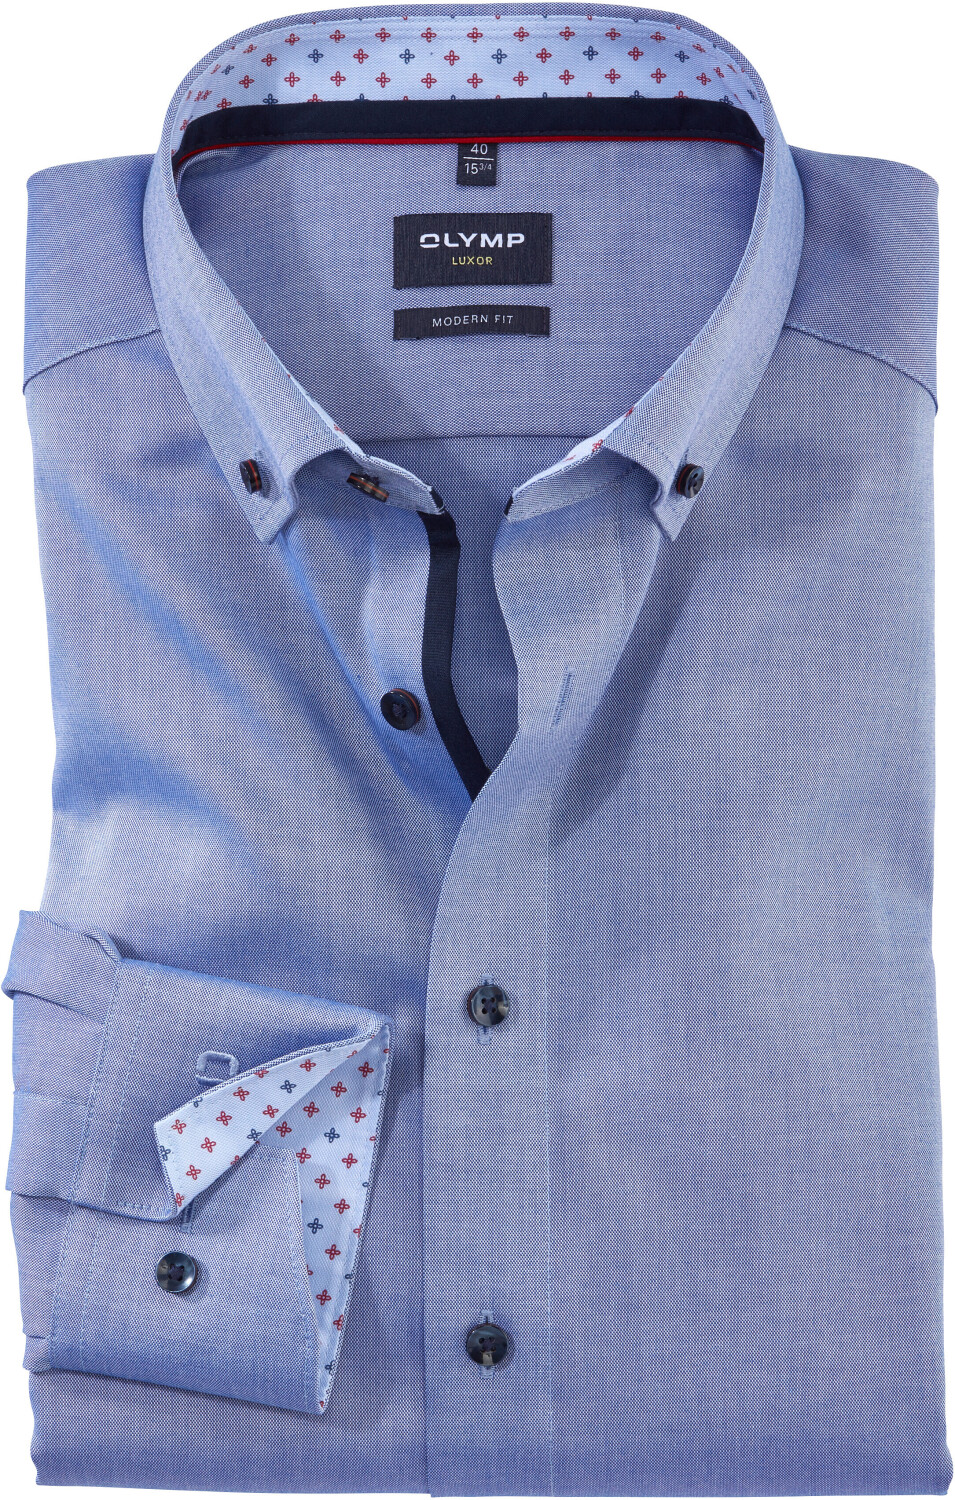 OLYMP Luxor Hemd Modern Fit Button-Down (1332-34-13) blau ab 67,85 € |  Preisvergleich bei